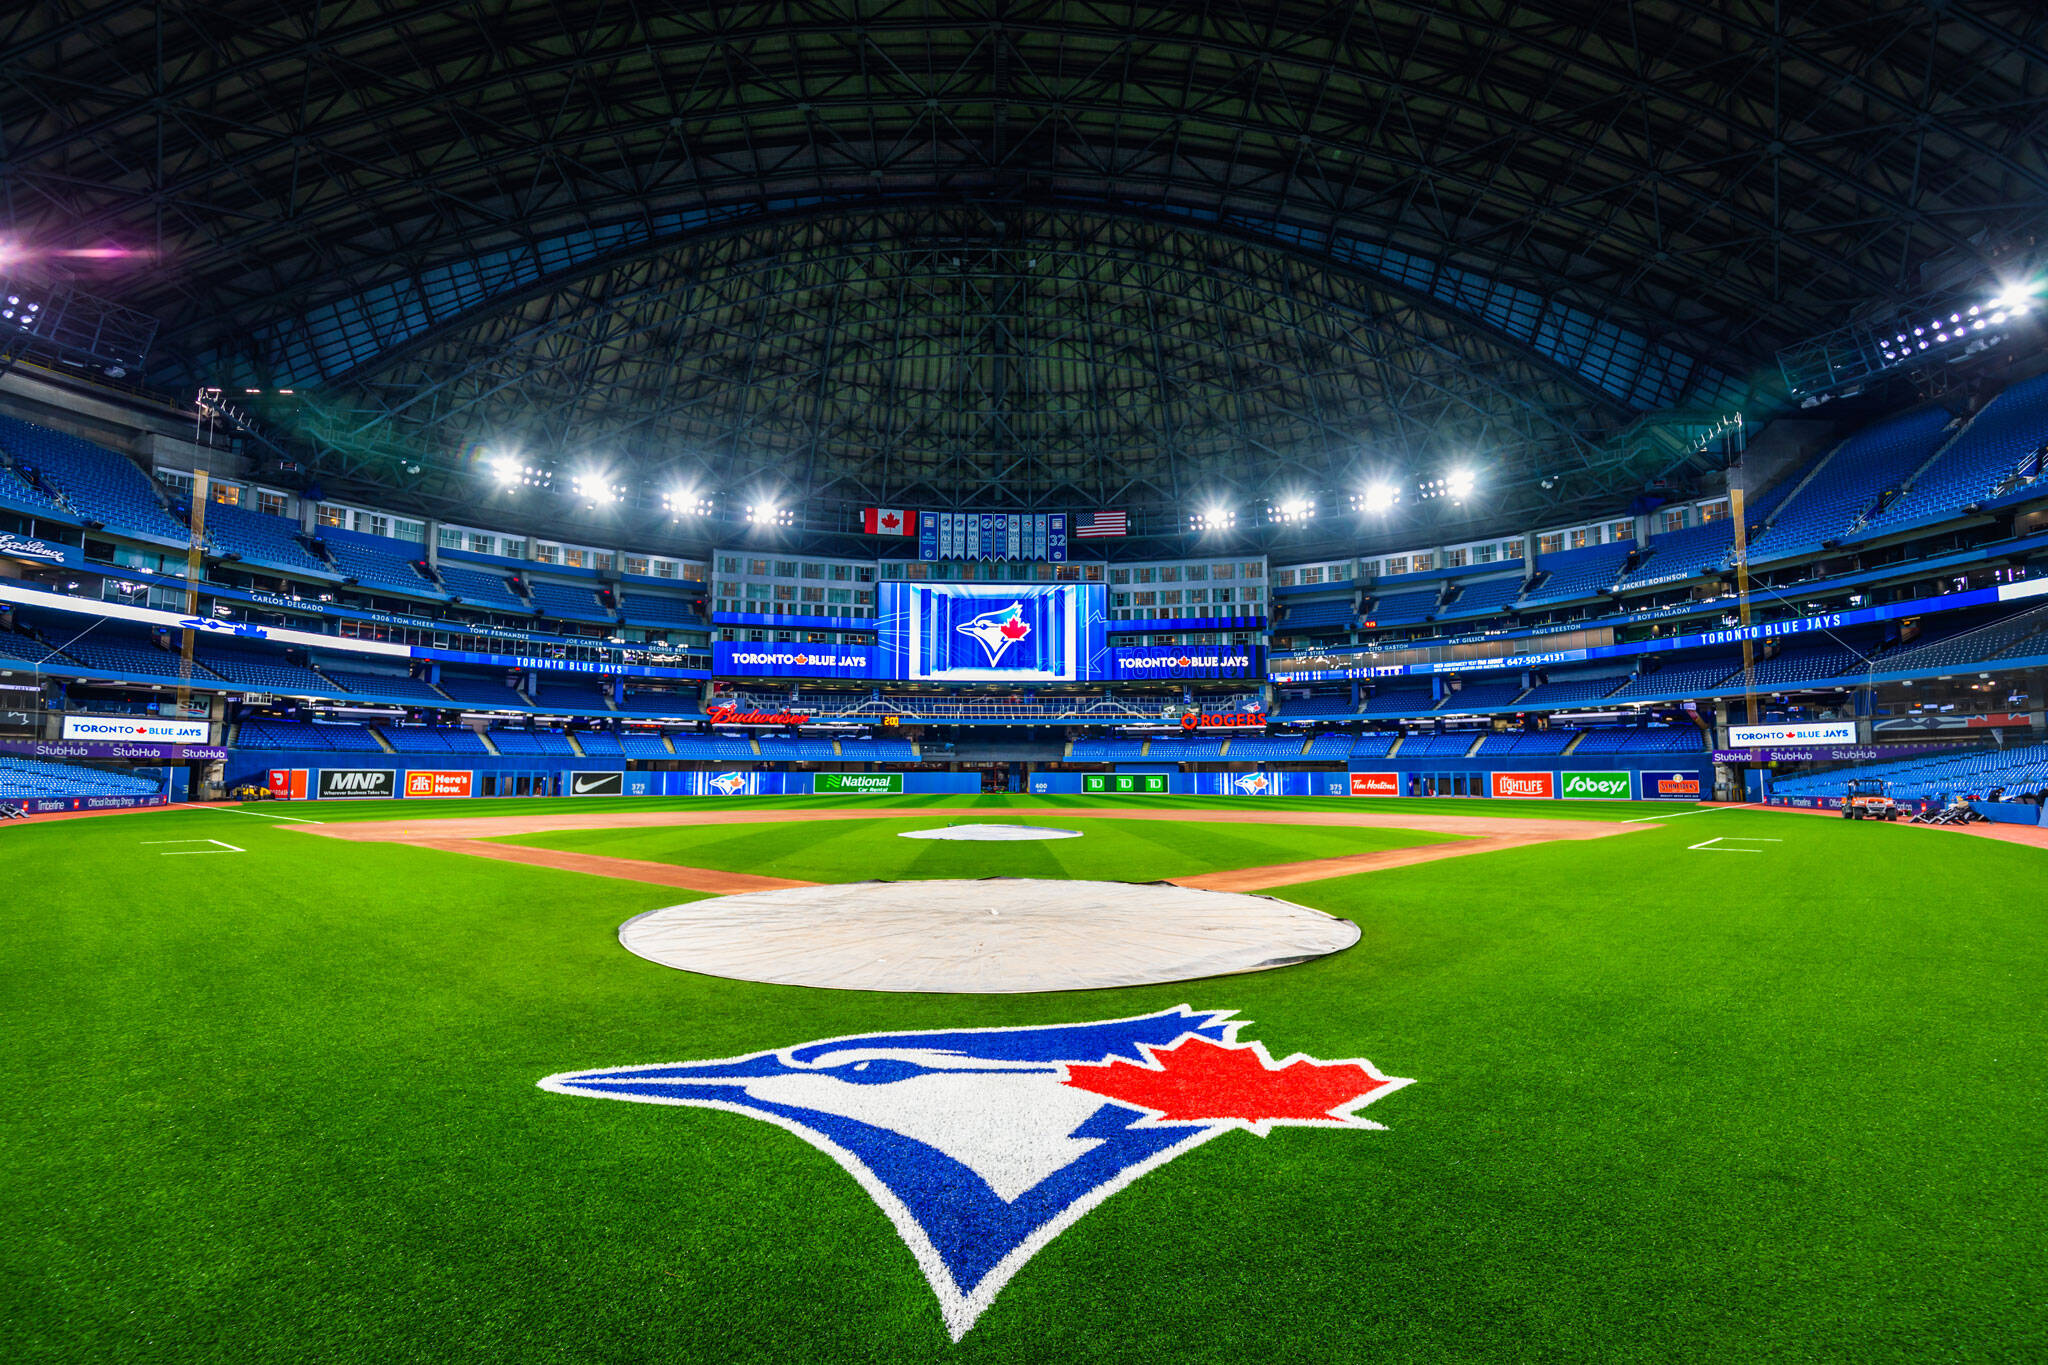 Rogers Center - SkyDome - Ballpark of the Toronto Blue Jays